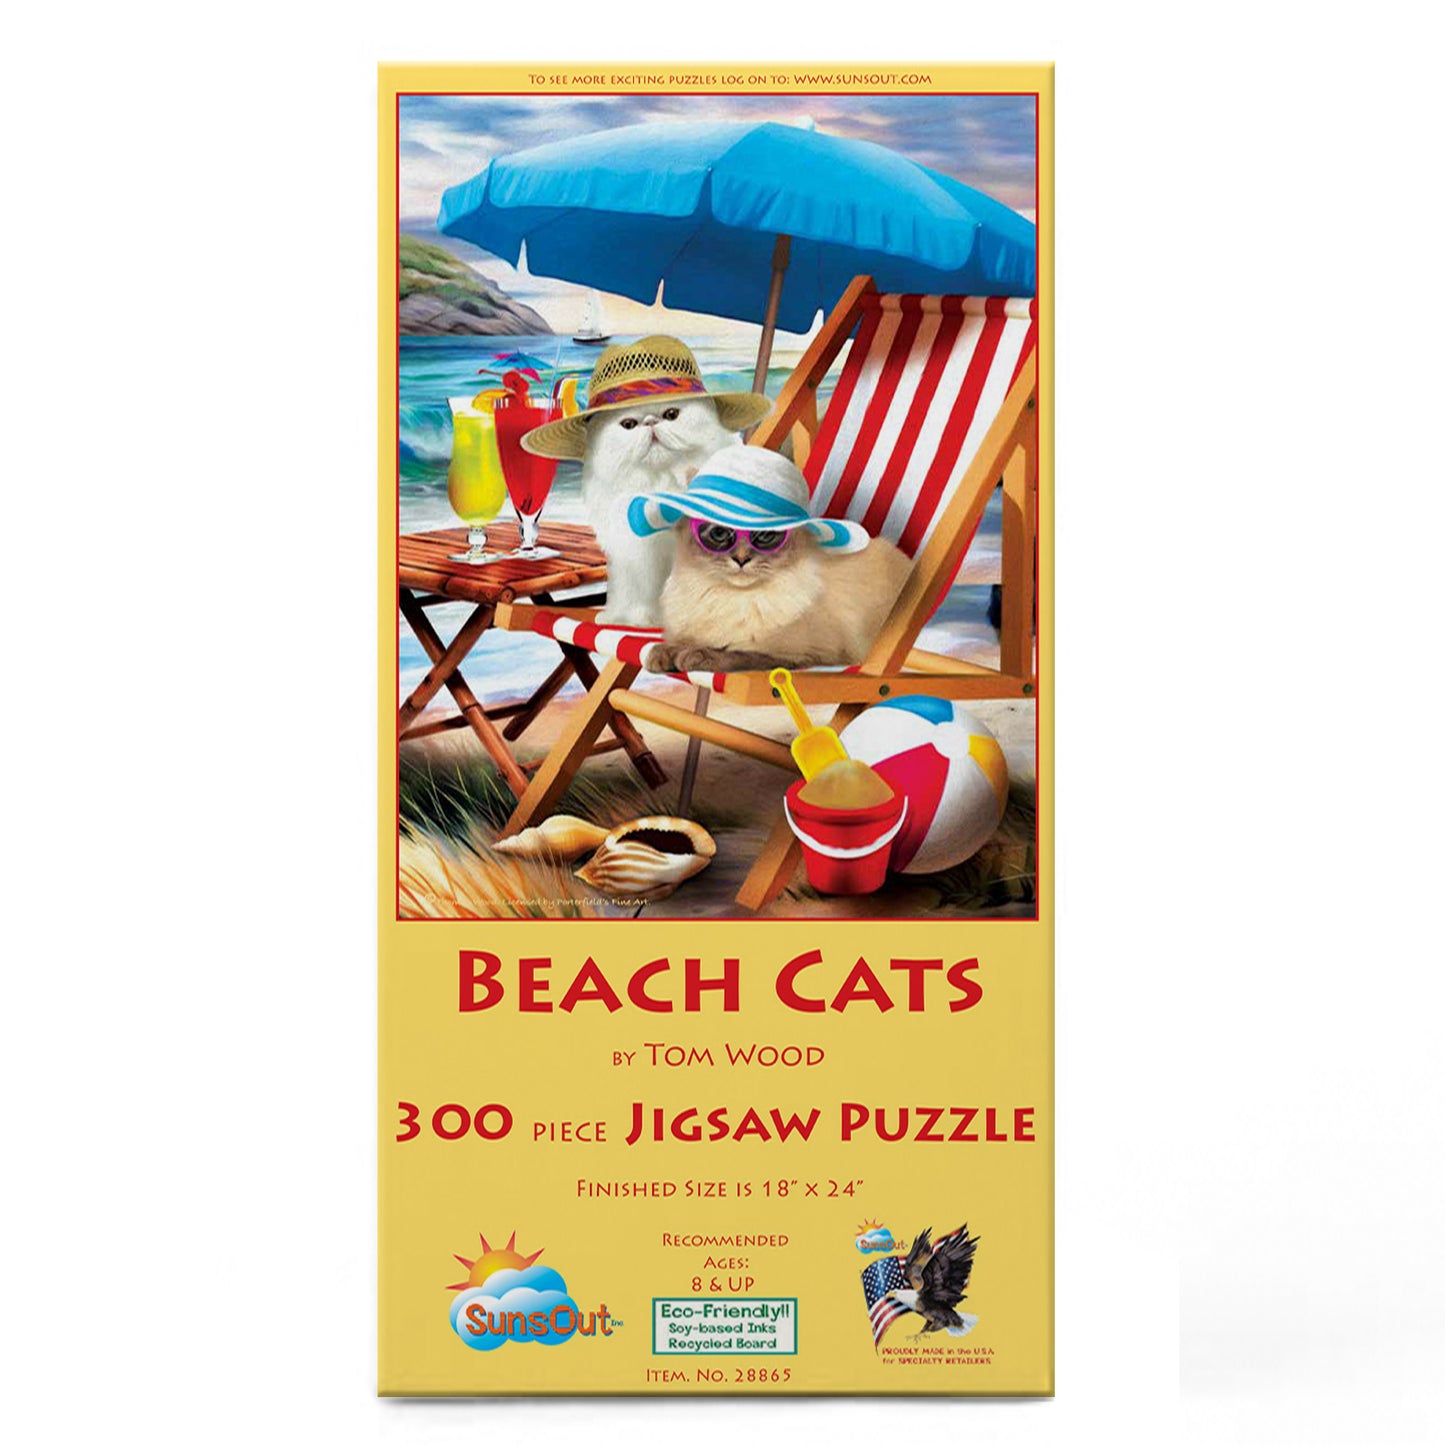 Beach Cats - 300 Piece Jigsaw Puzzle